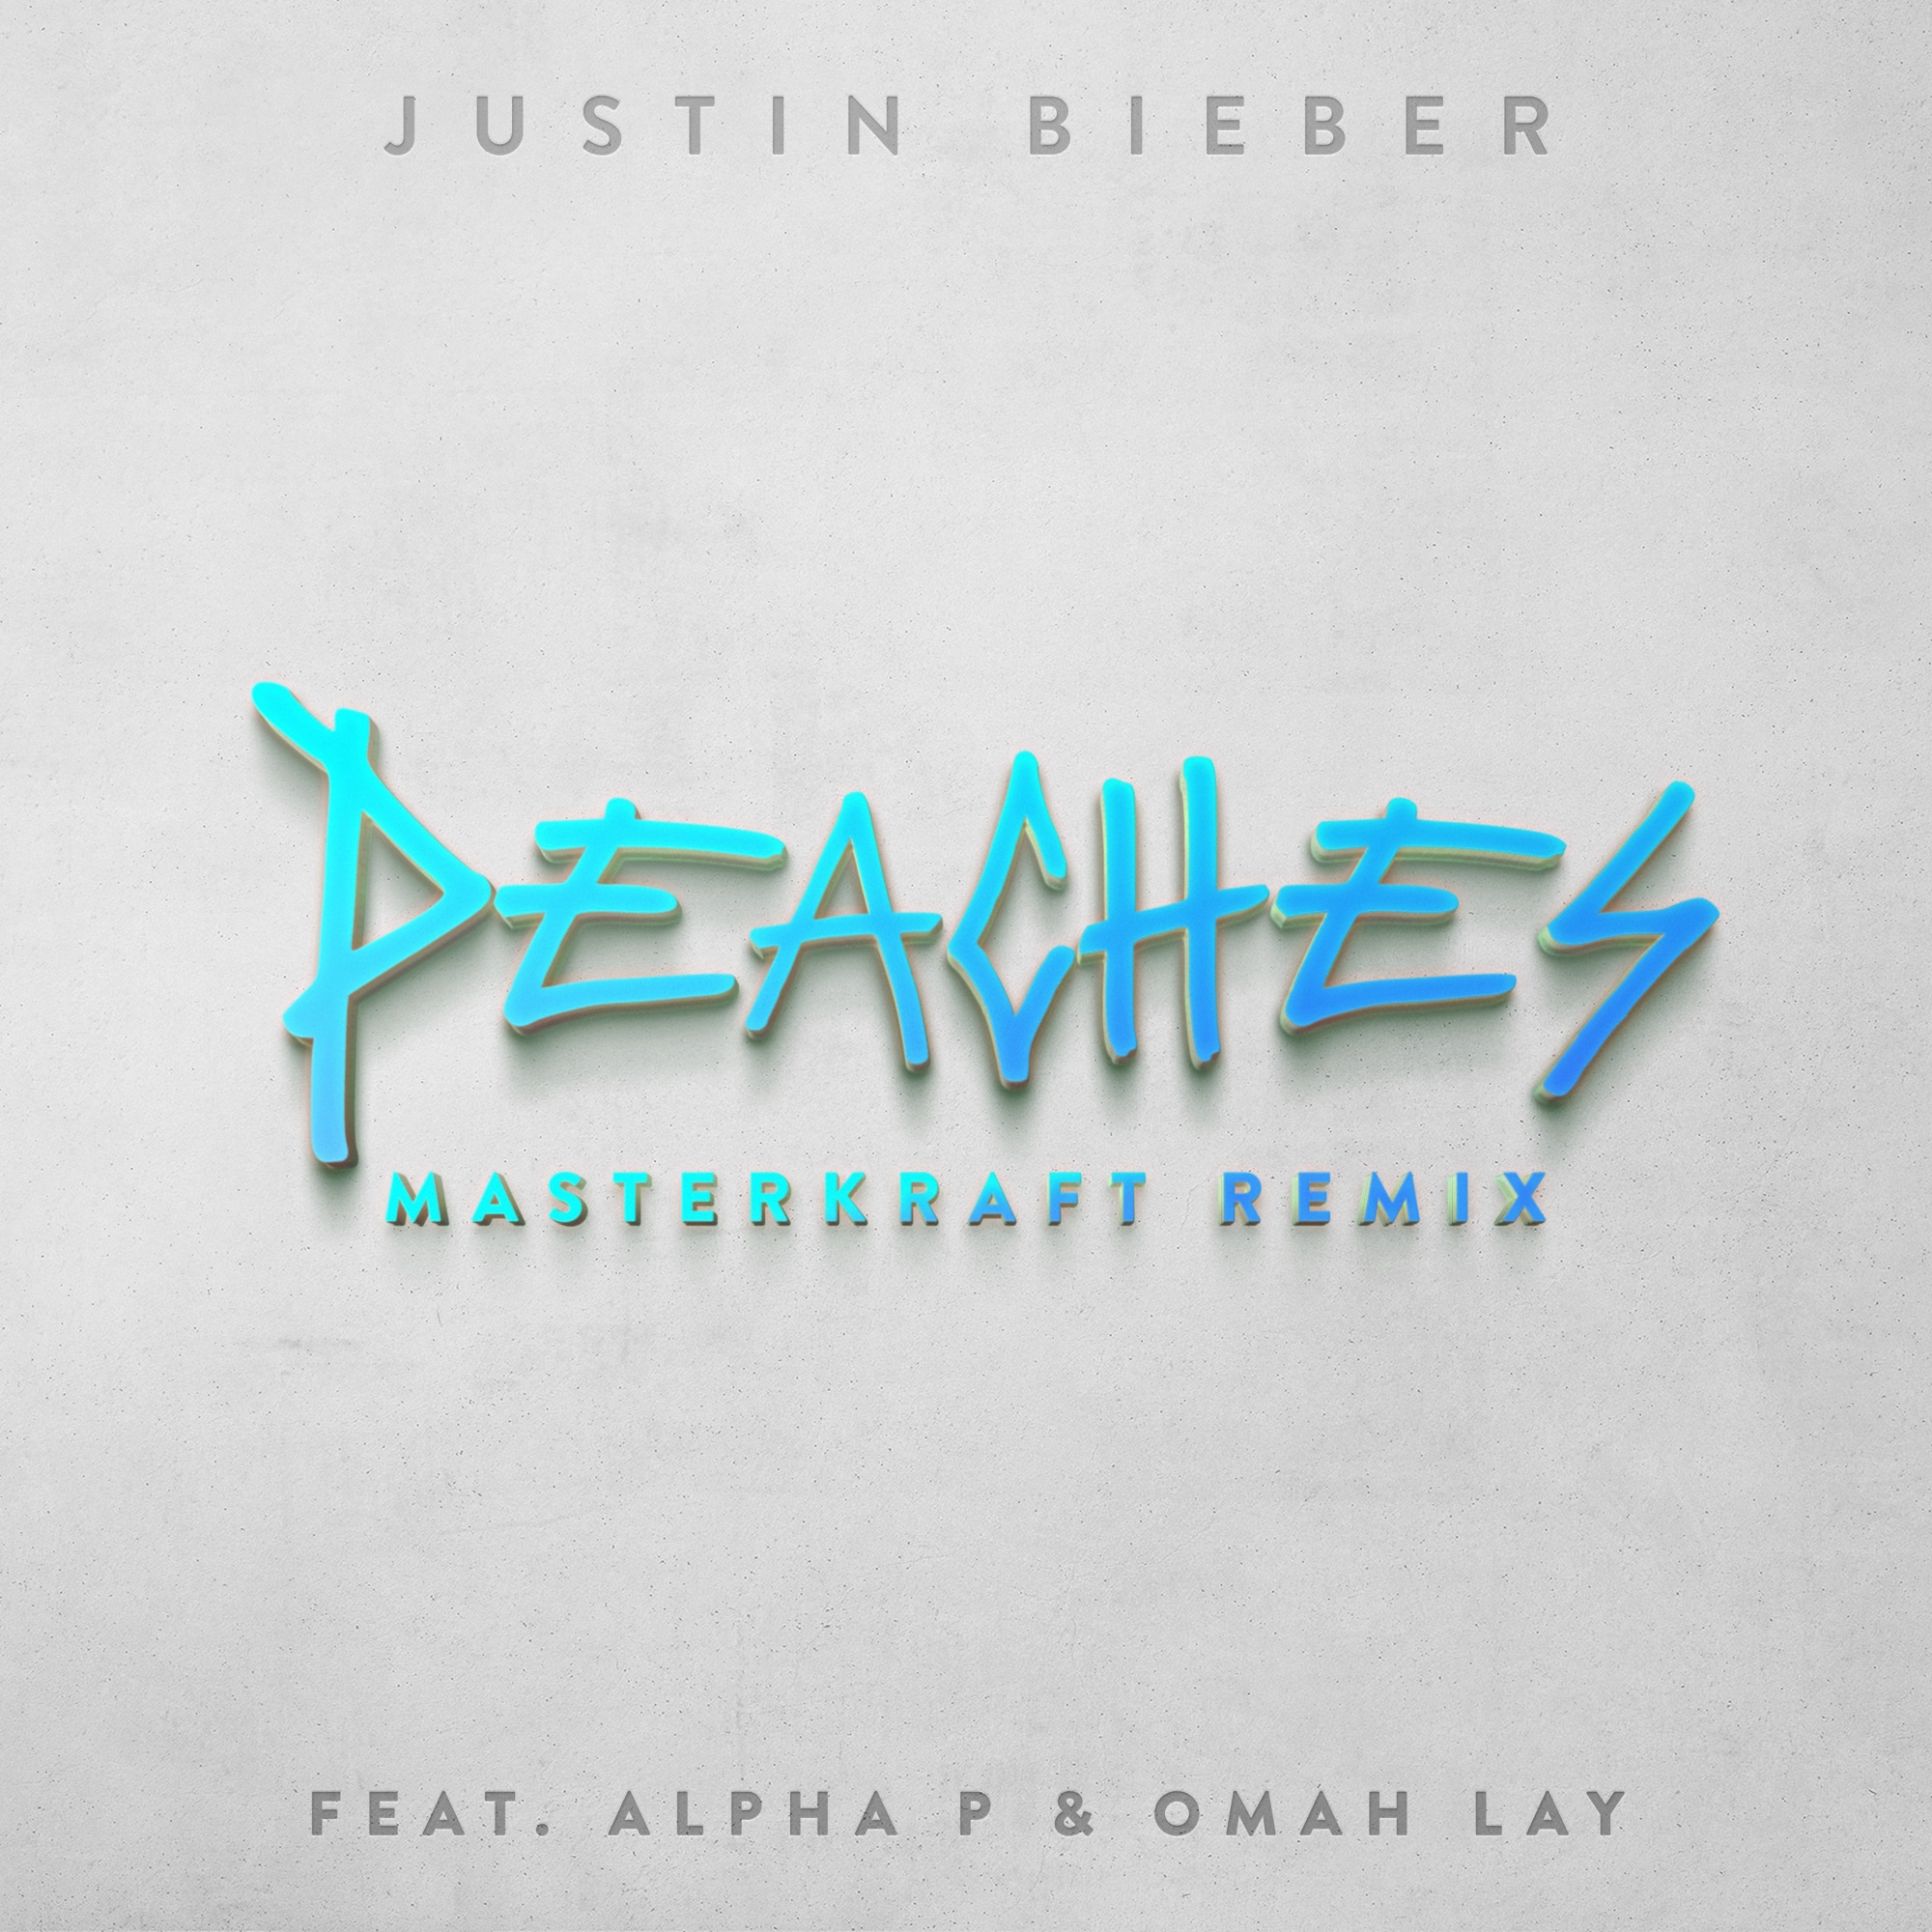 Justin Bieber - Peaches (Masterkraft Remix) [feat. Alpha P & Omah Lay] - Single